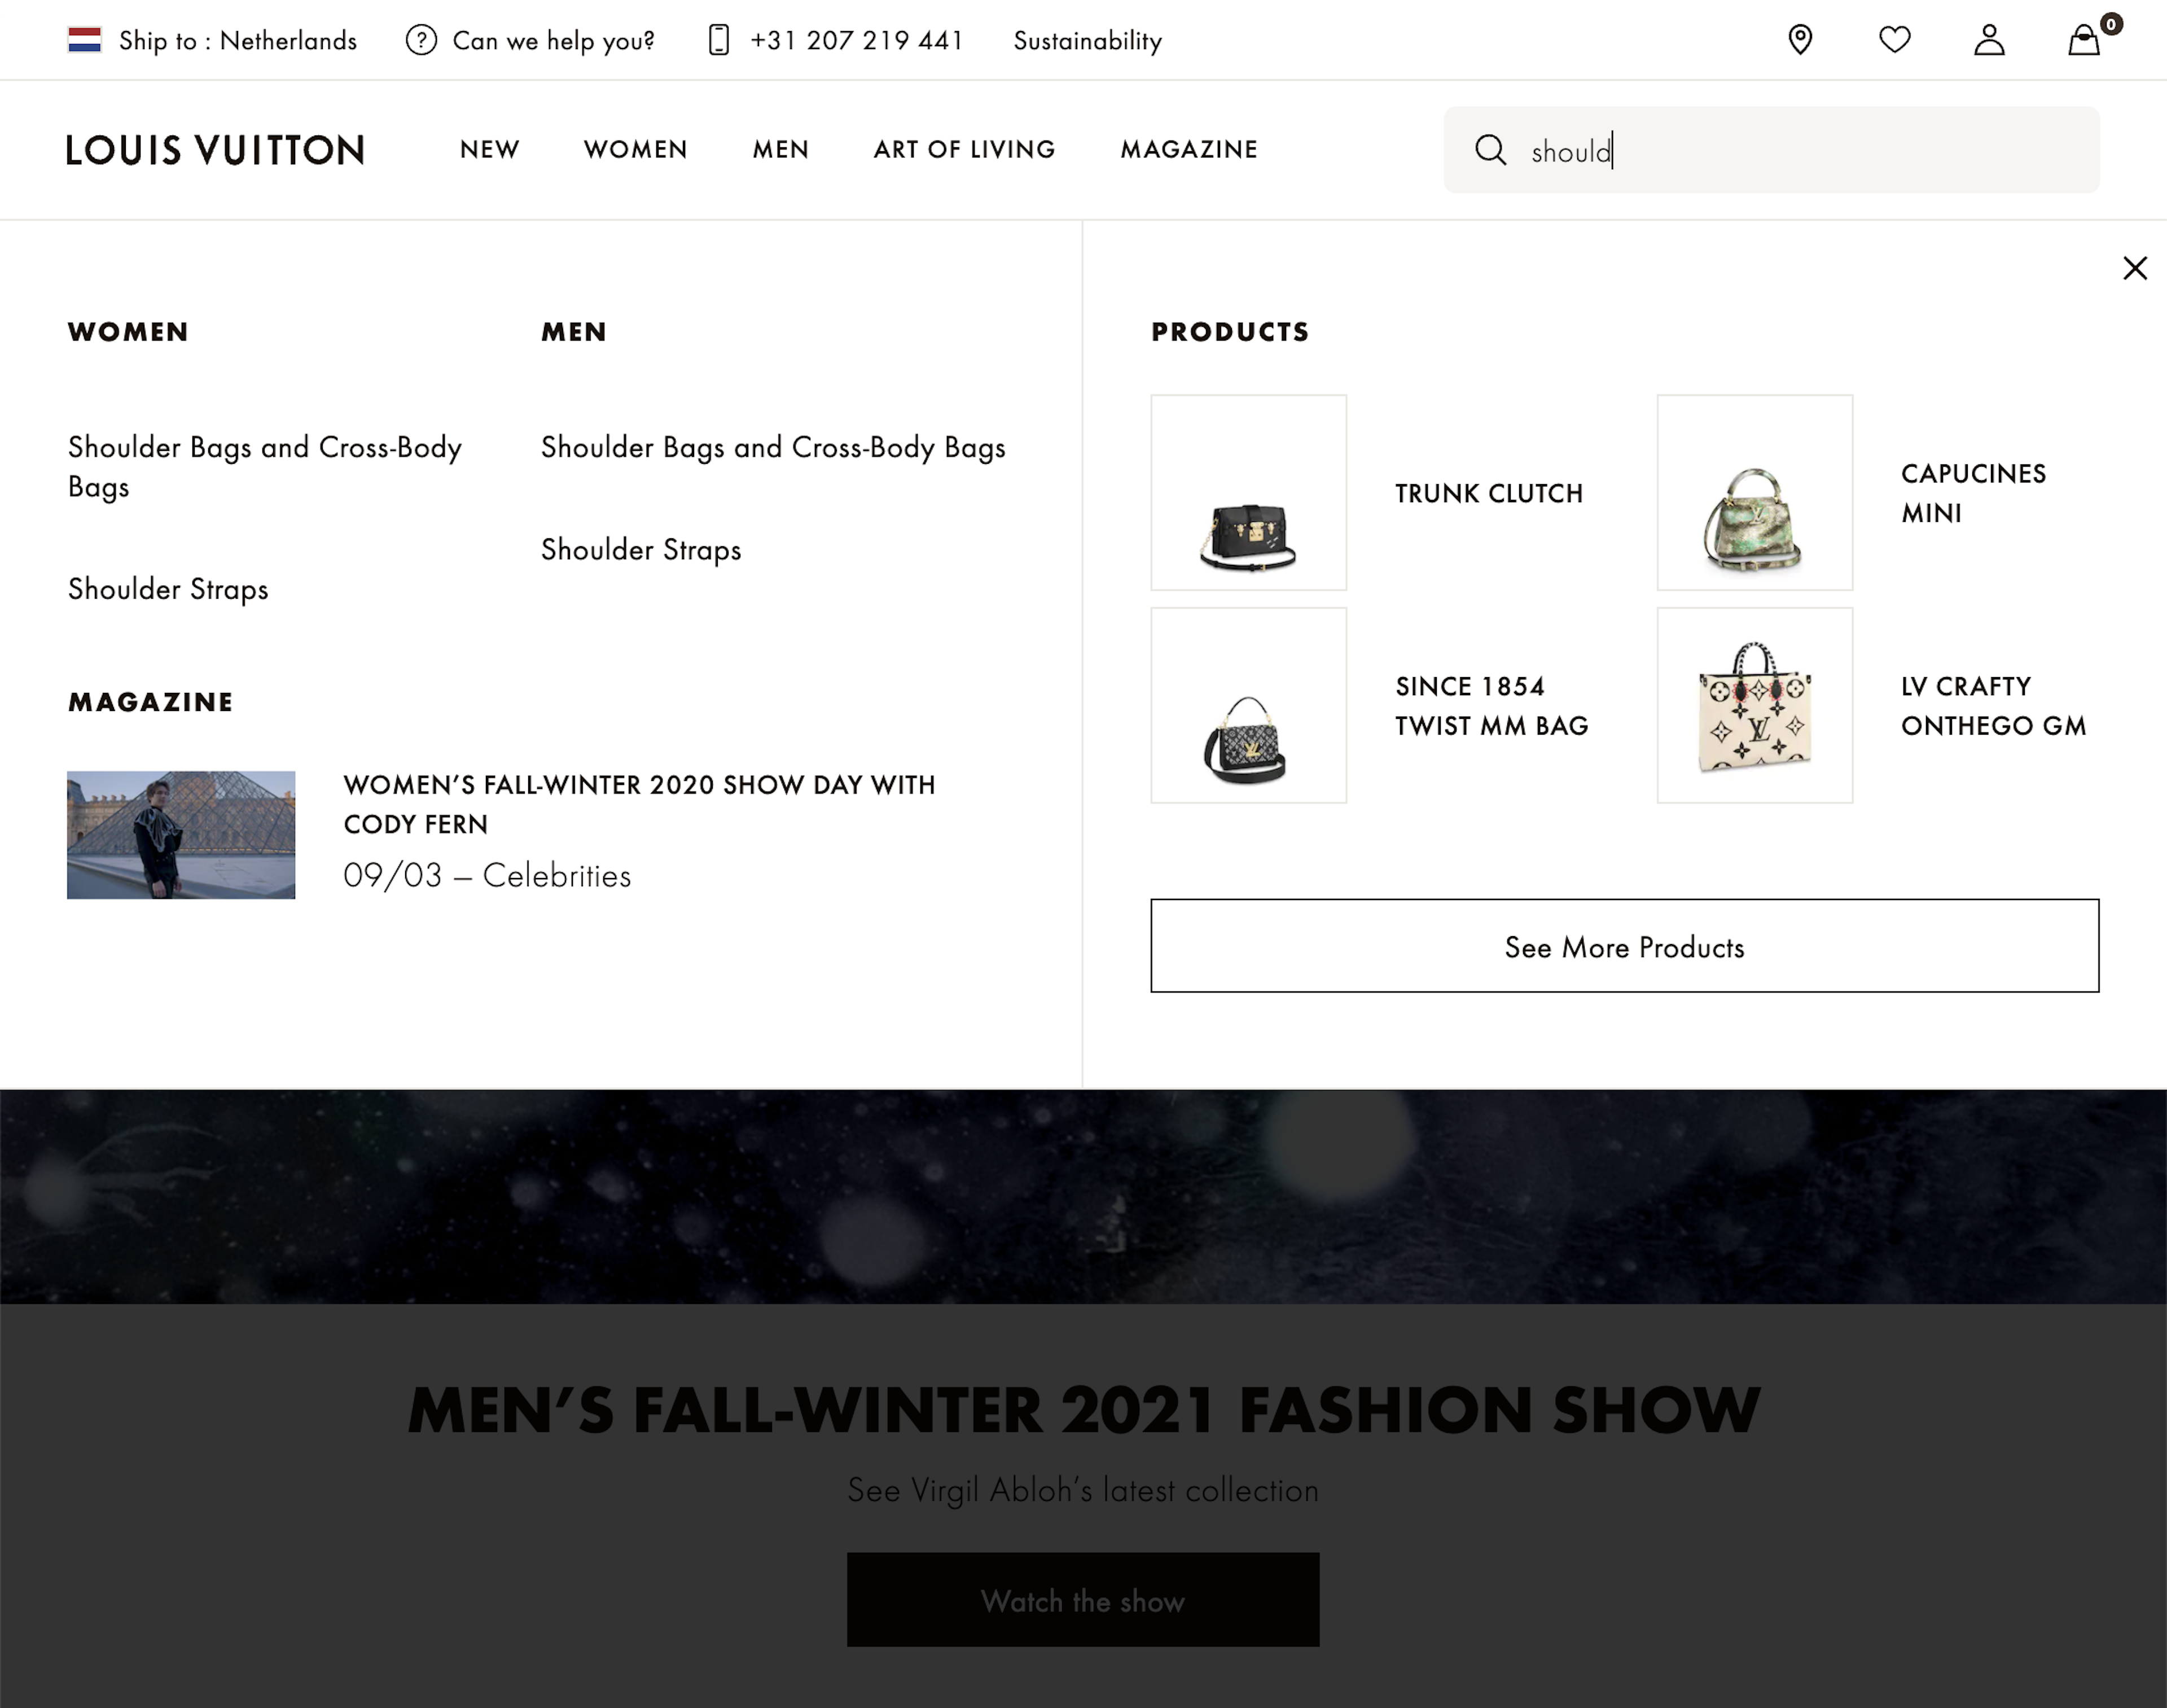 Louis Vuitton - E-Commerce Website - Made with Vue.js